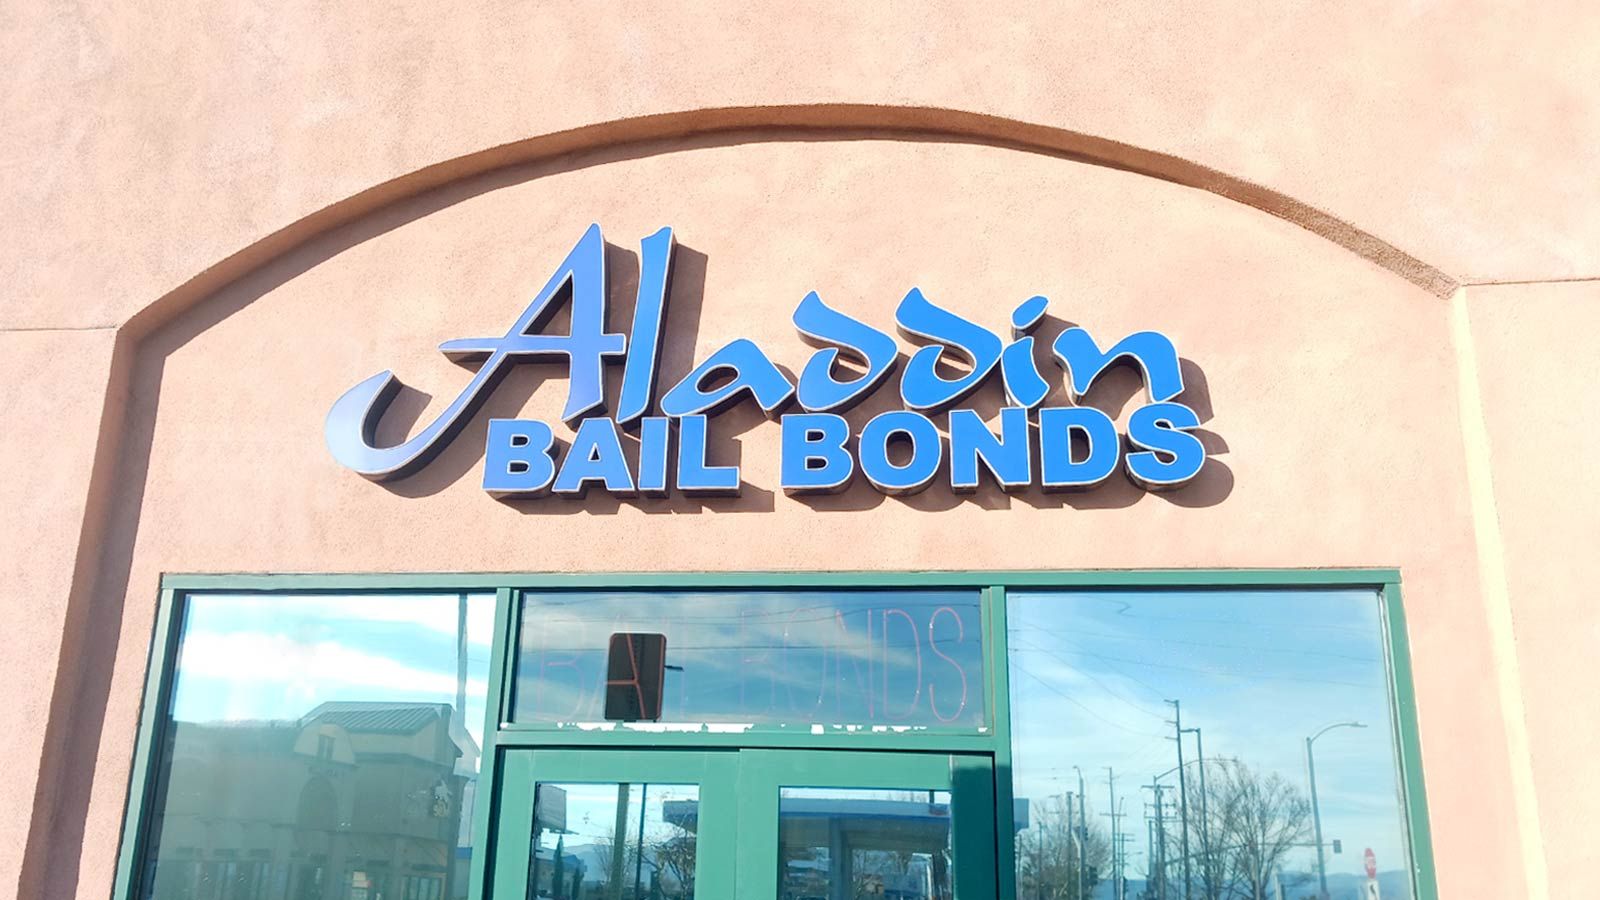 Aladdin Bail Bonds custom letter sign installed outdoors